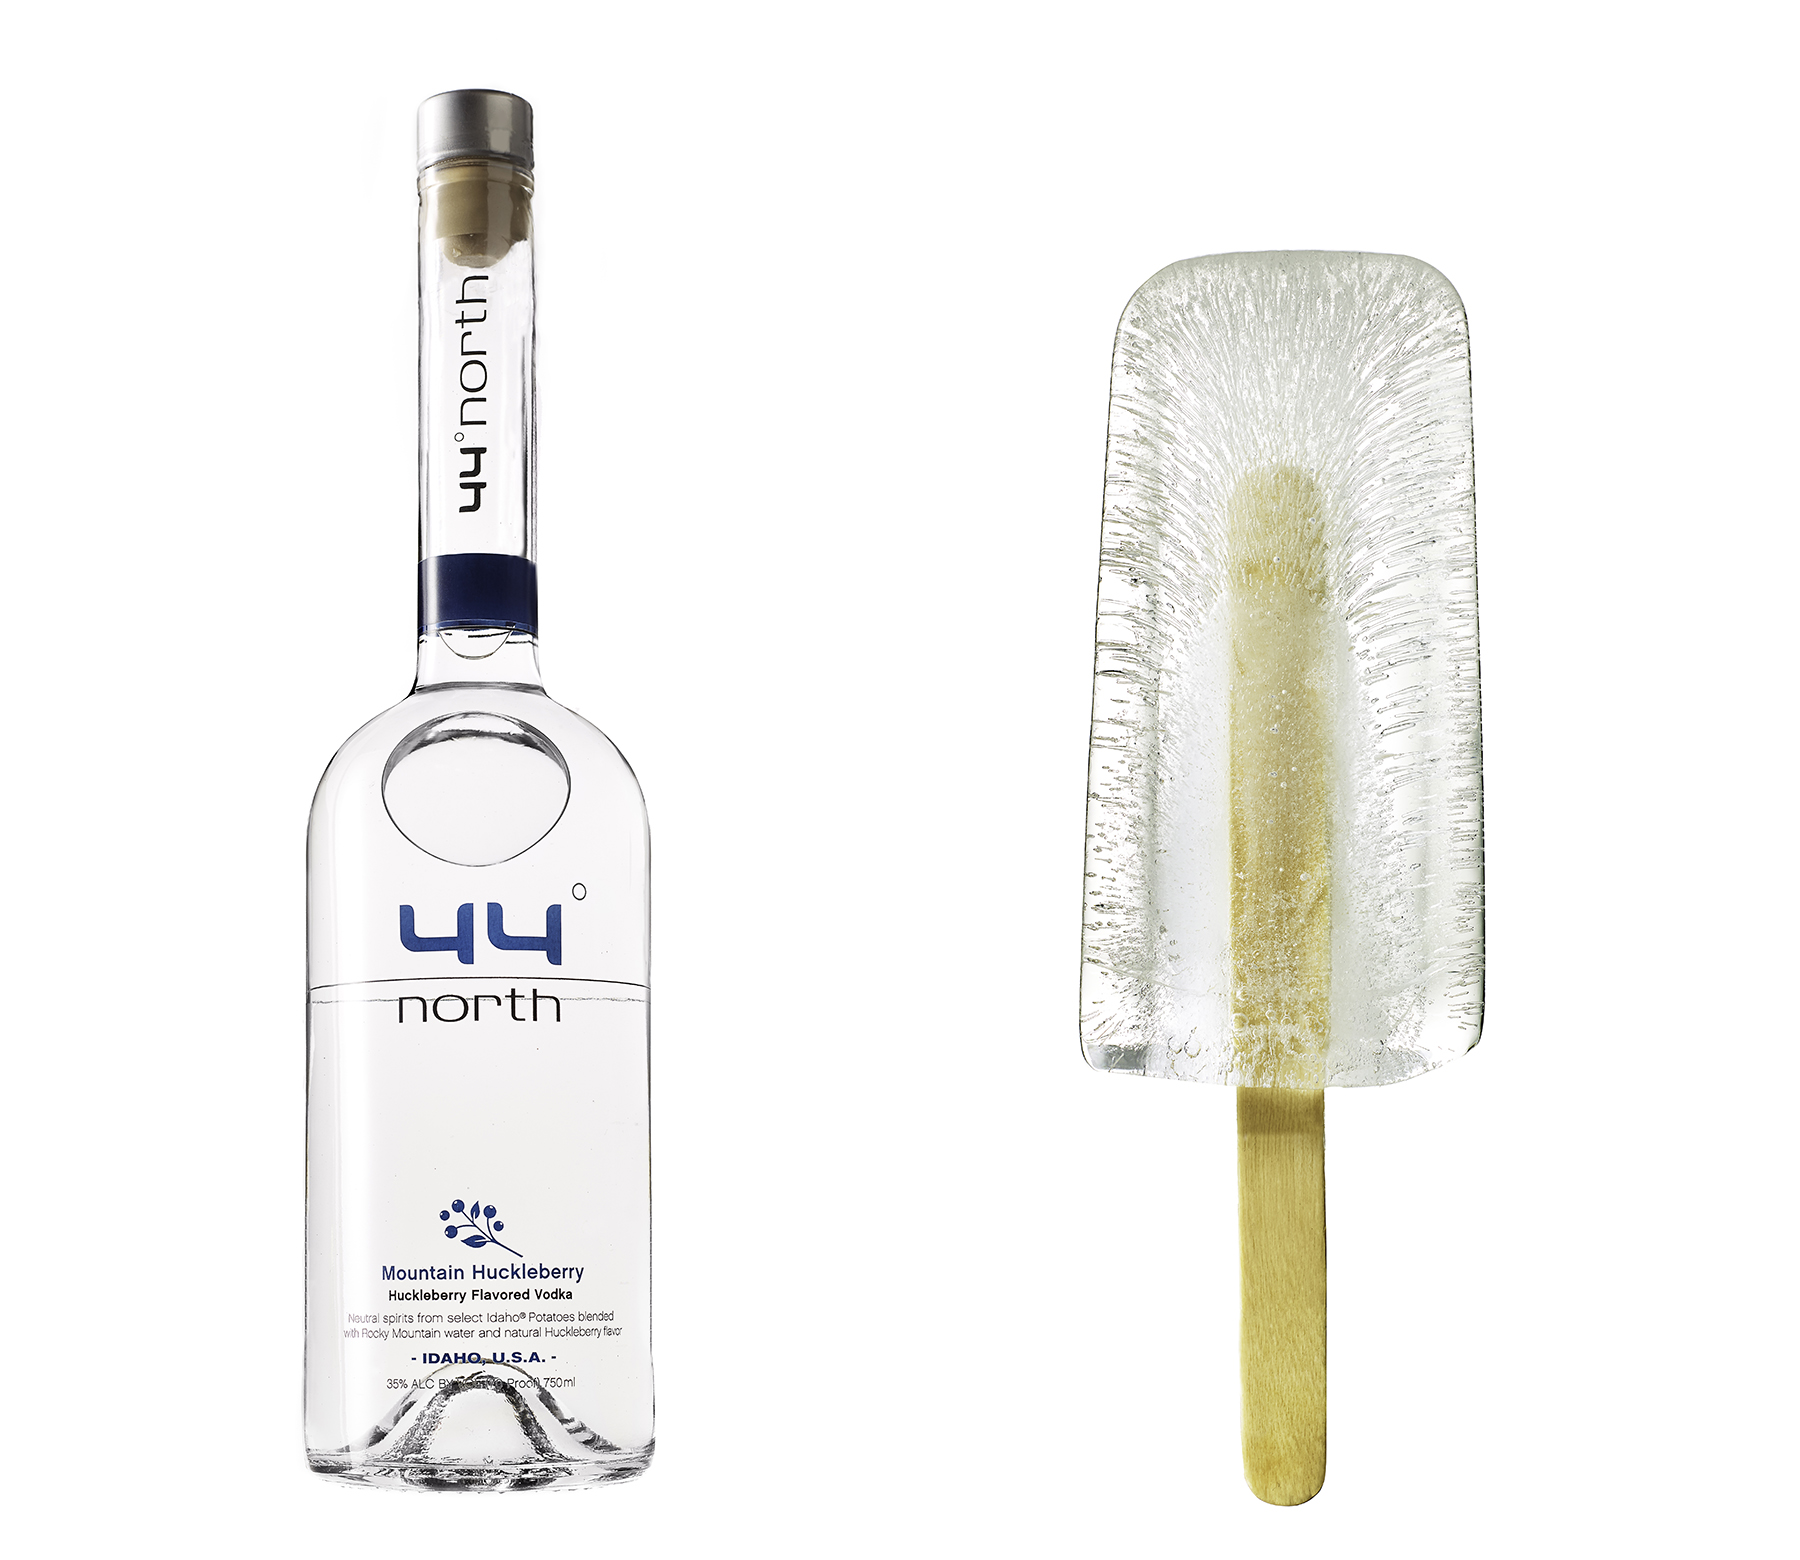 40 degree- Vodka popsicle- Flavored vodka- Henrique Du Tiel 